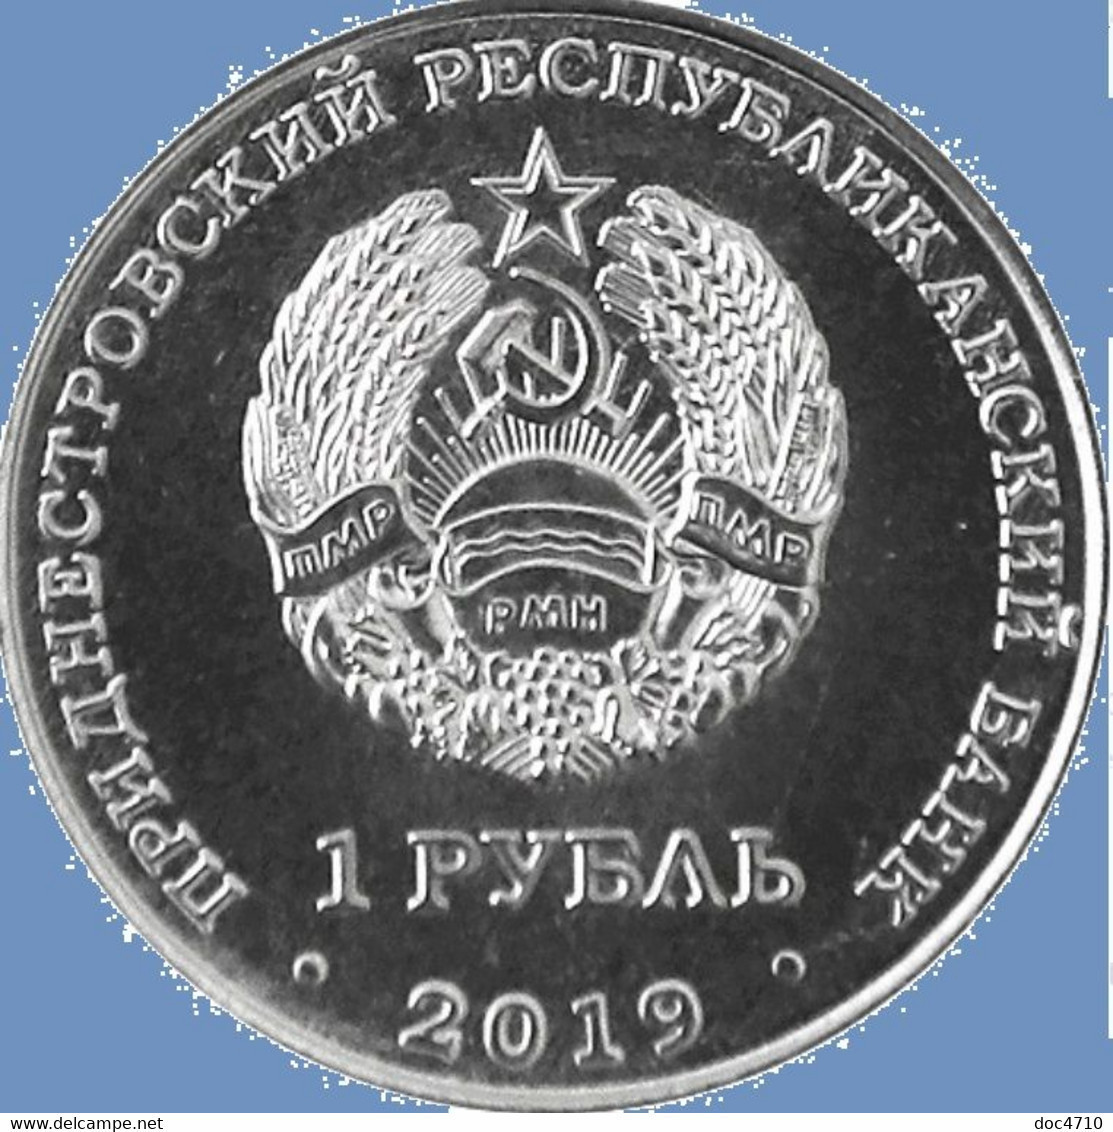 Moldova-Transnistria 1 Ruble 2019, Chinese Zodiac Series - Year Of The Metal Rat 2020, KM#New, Unc - Moldawien (Moldau)